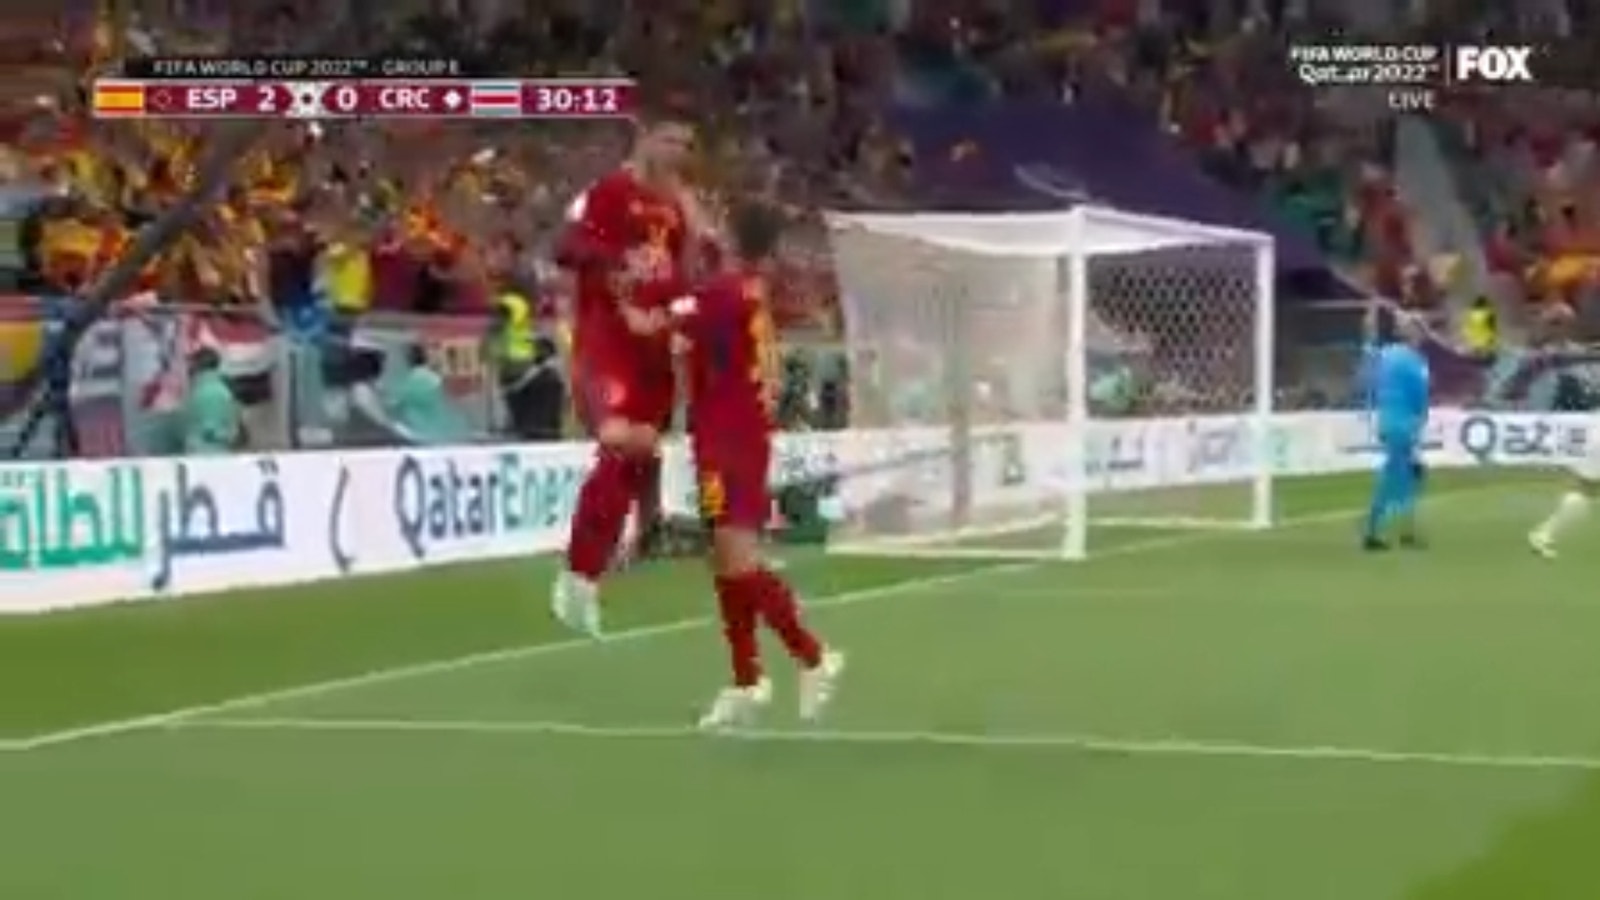 Spain's Ferran Torres scores goal against Costa Rica in 31'